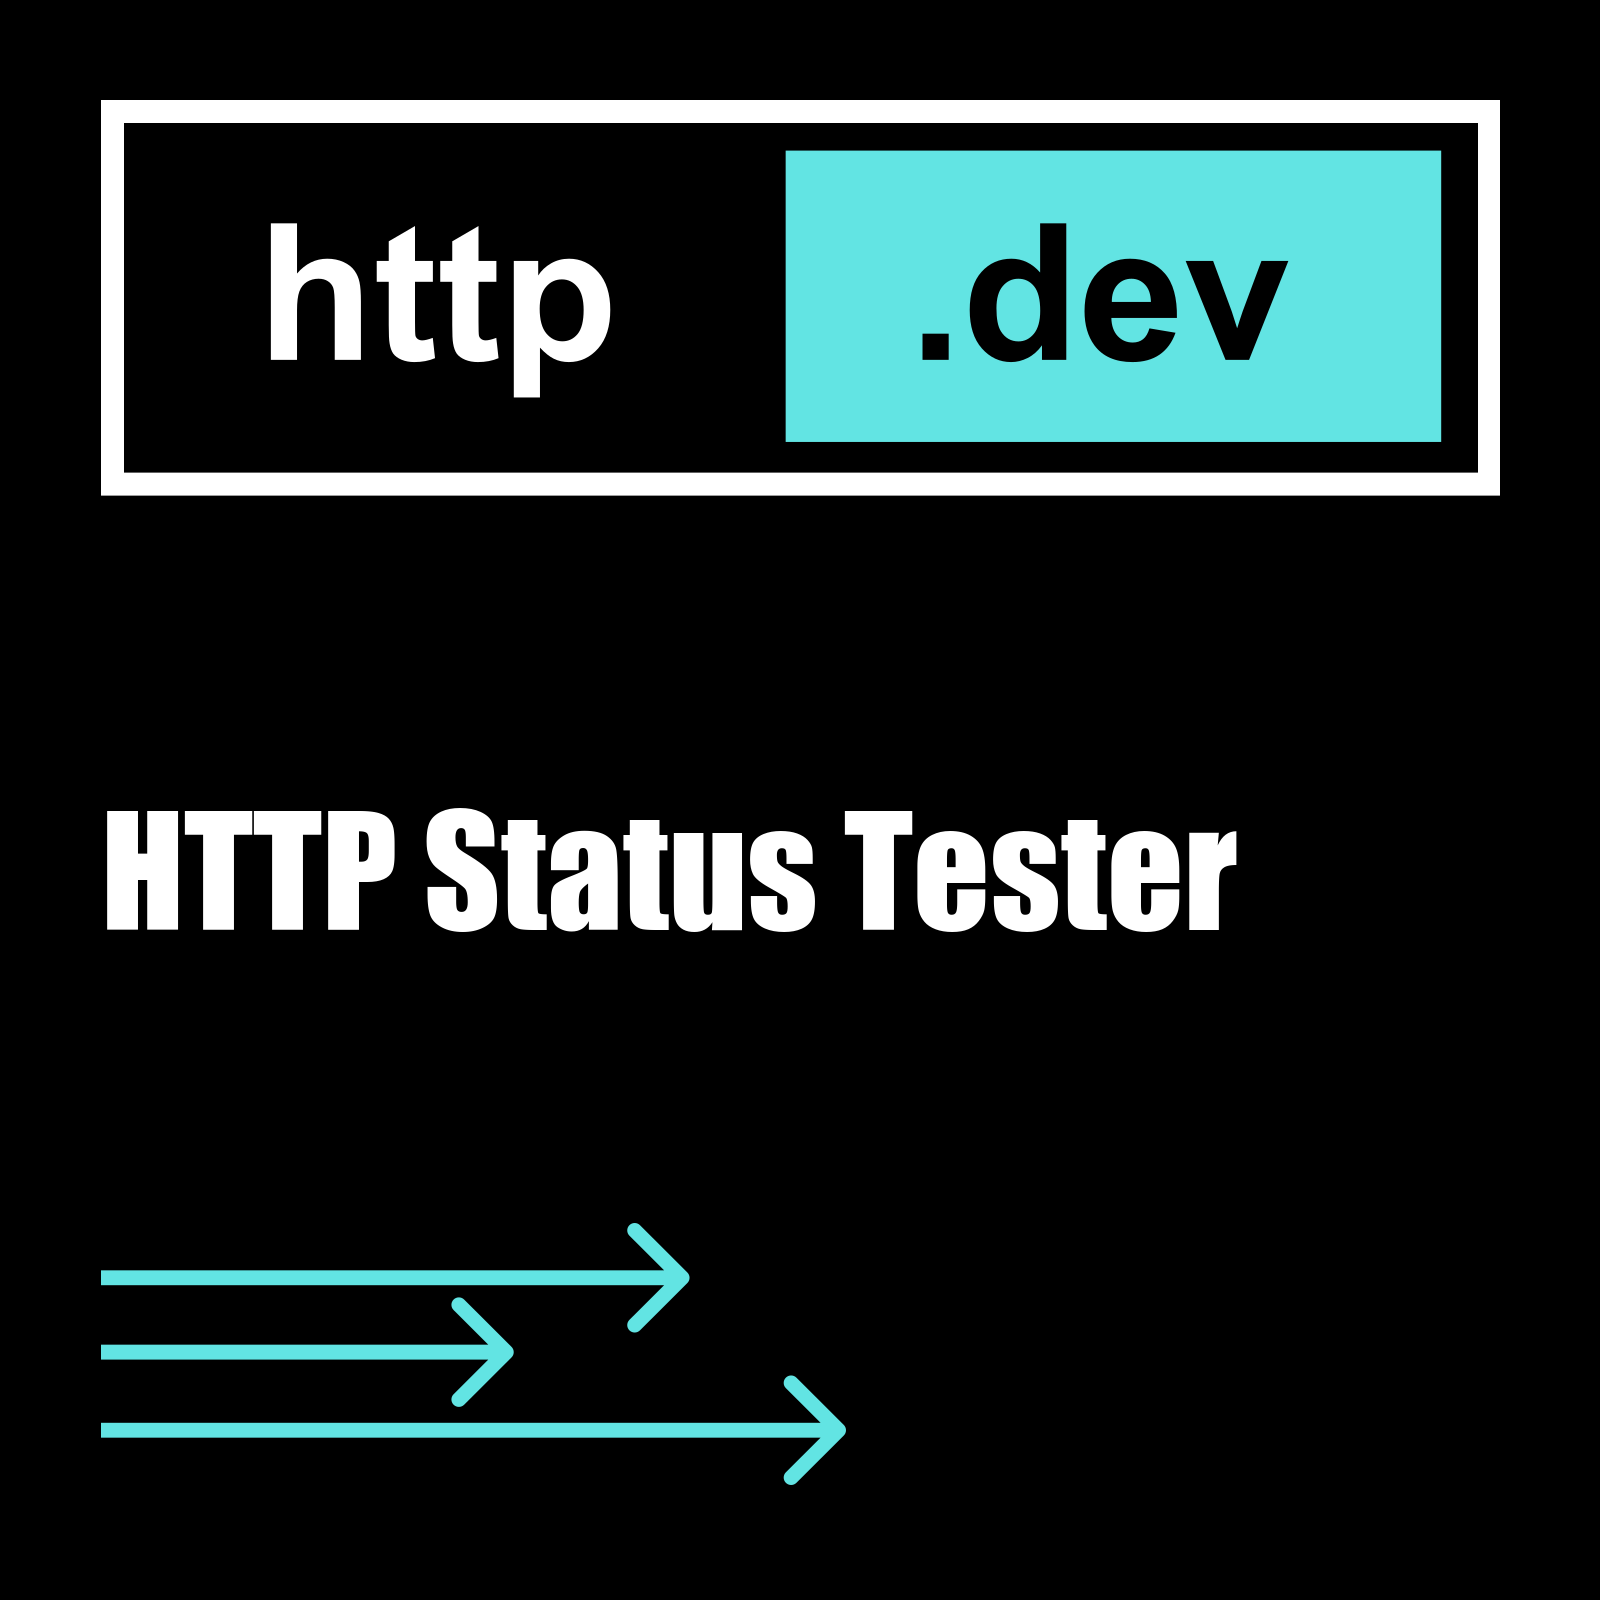 Check HTTP Response Status Codes